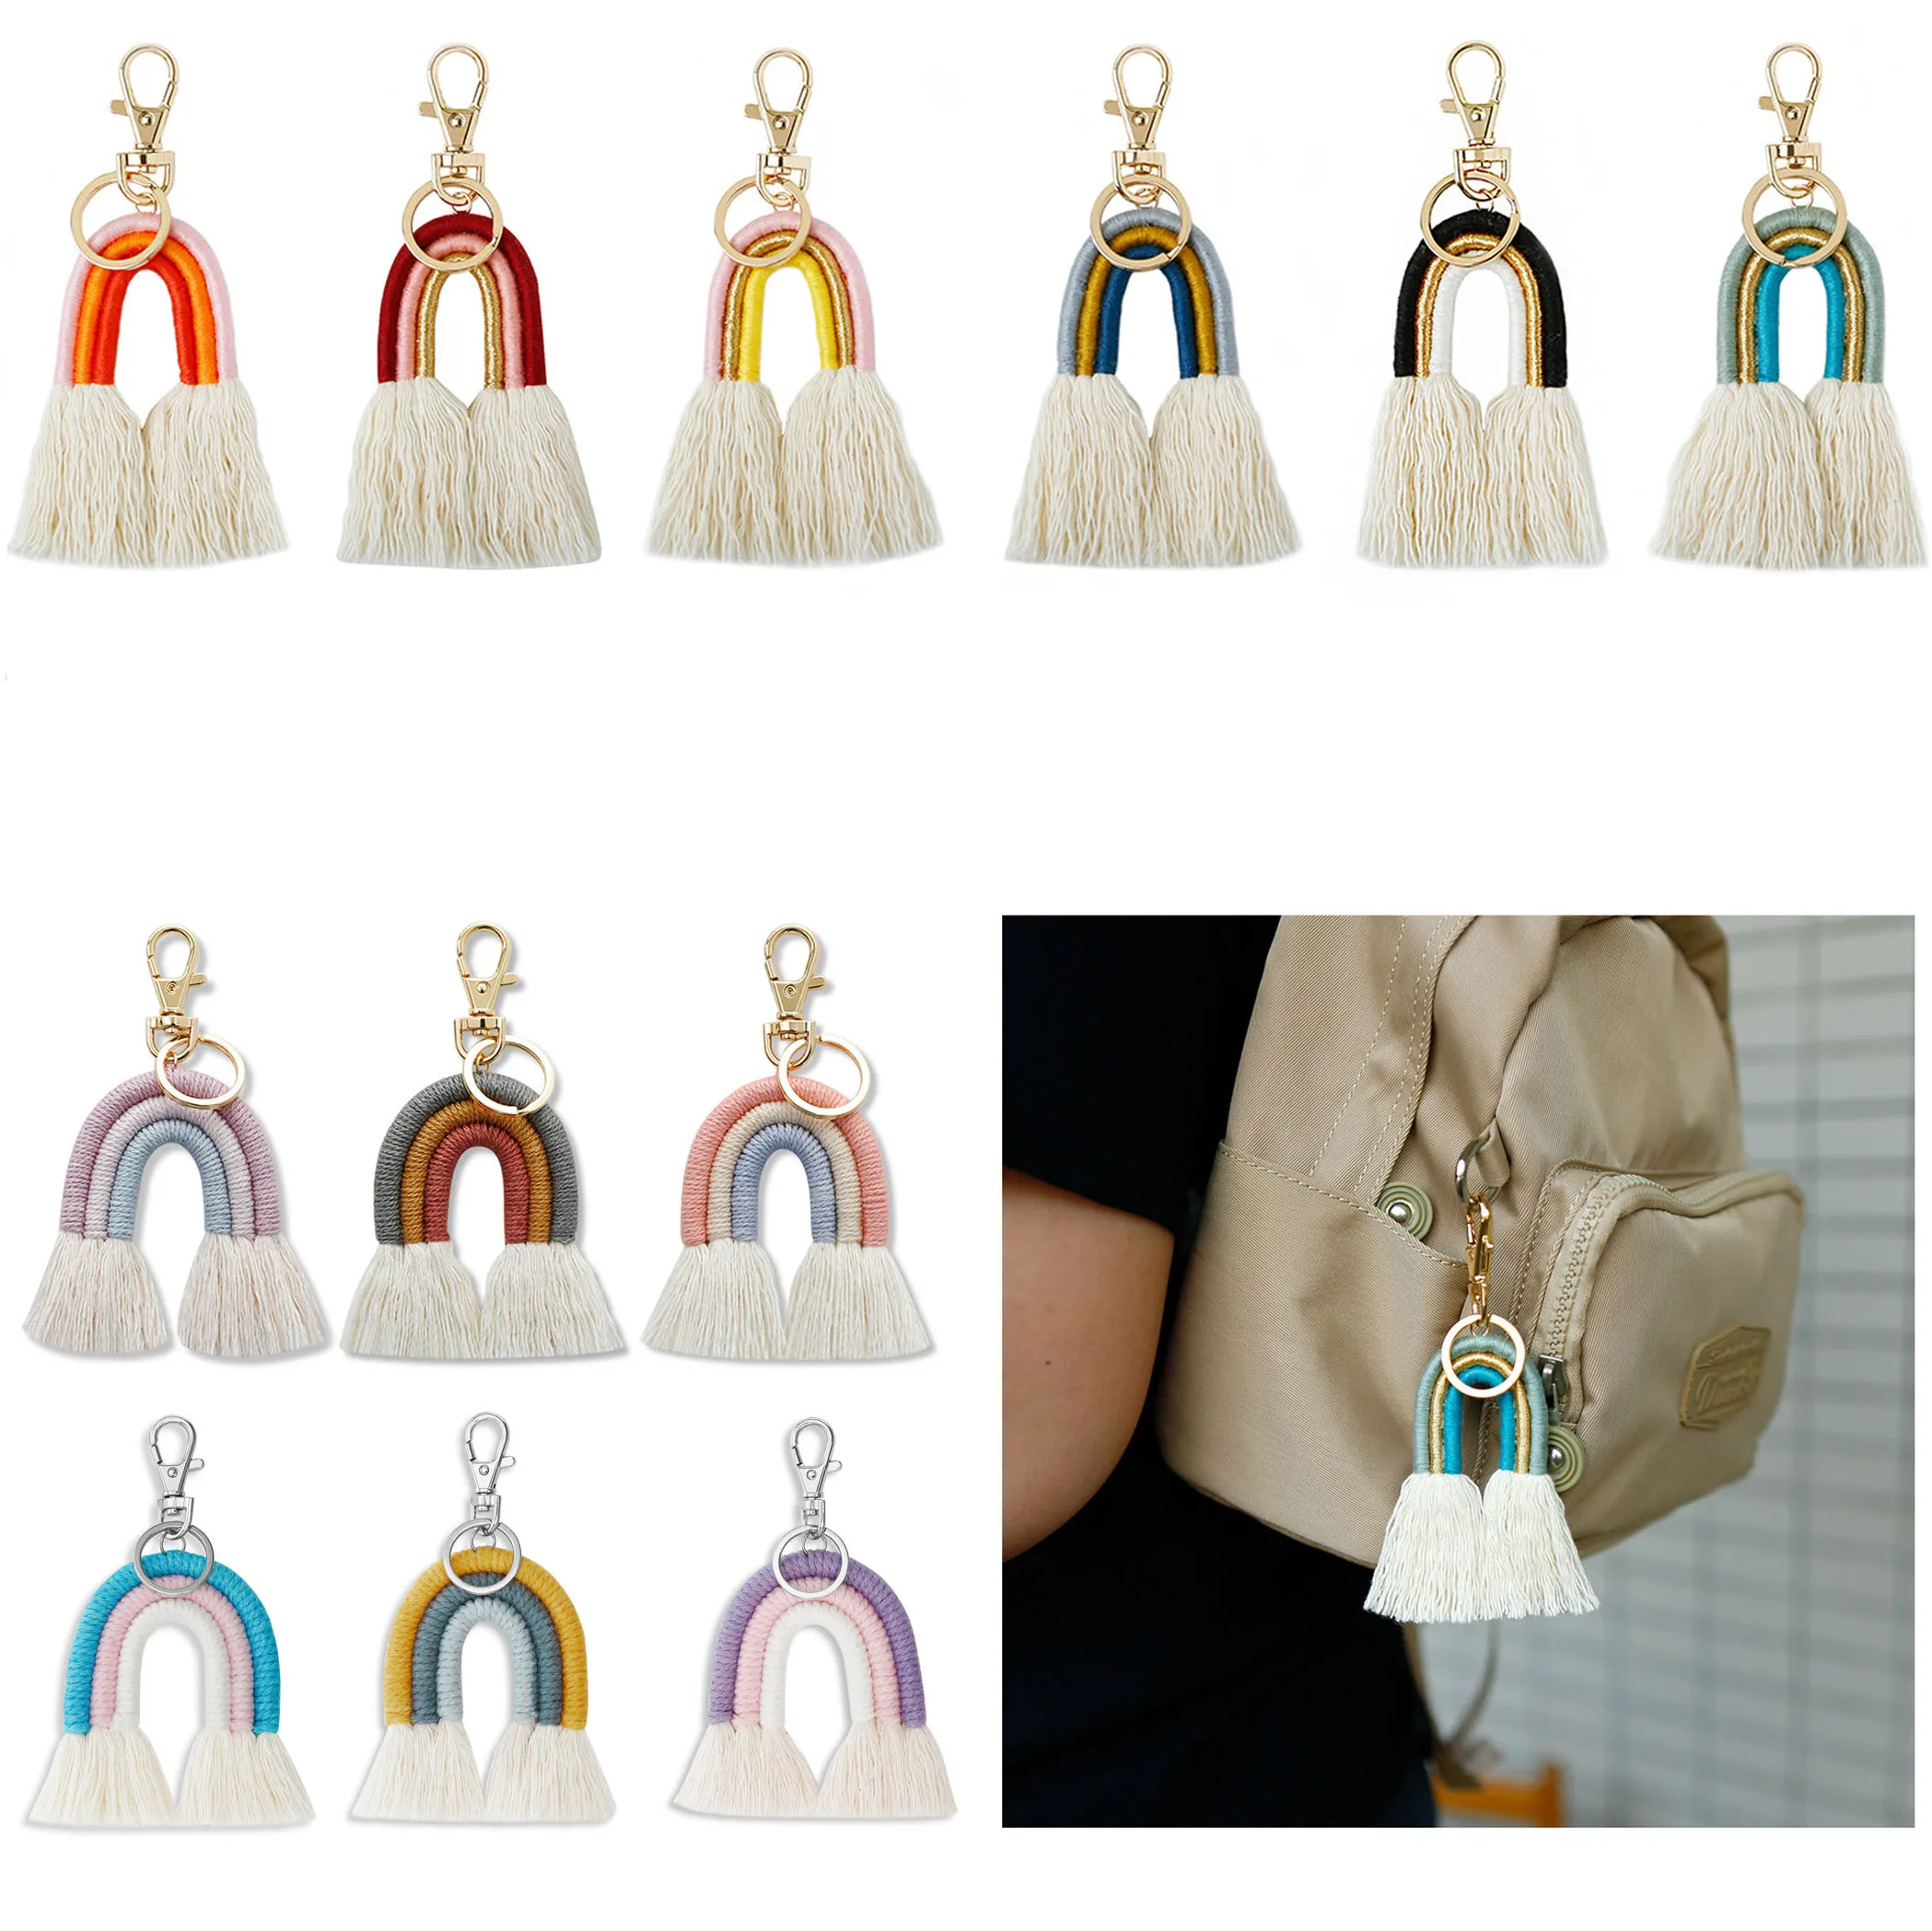 

Car Keyring Holder Jewelry Macrame Weaving Rainbow Tassel Keychains for Bag Wallet Purse Women